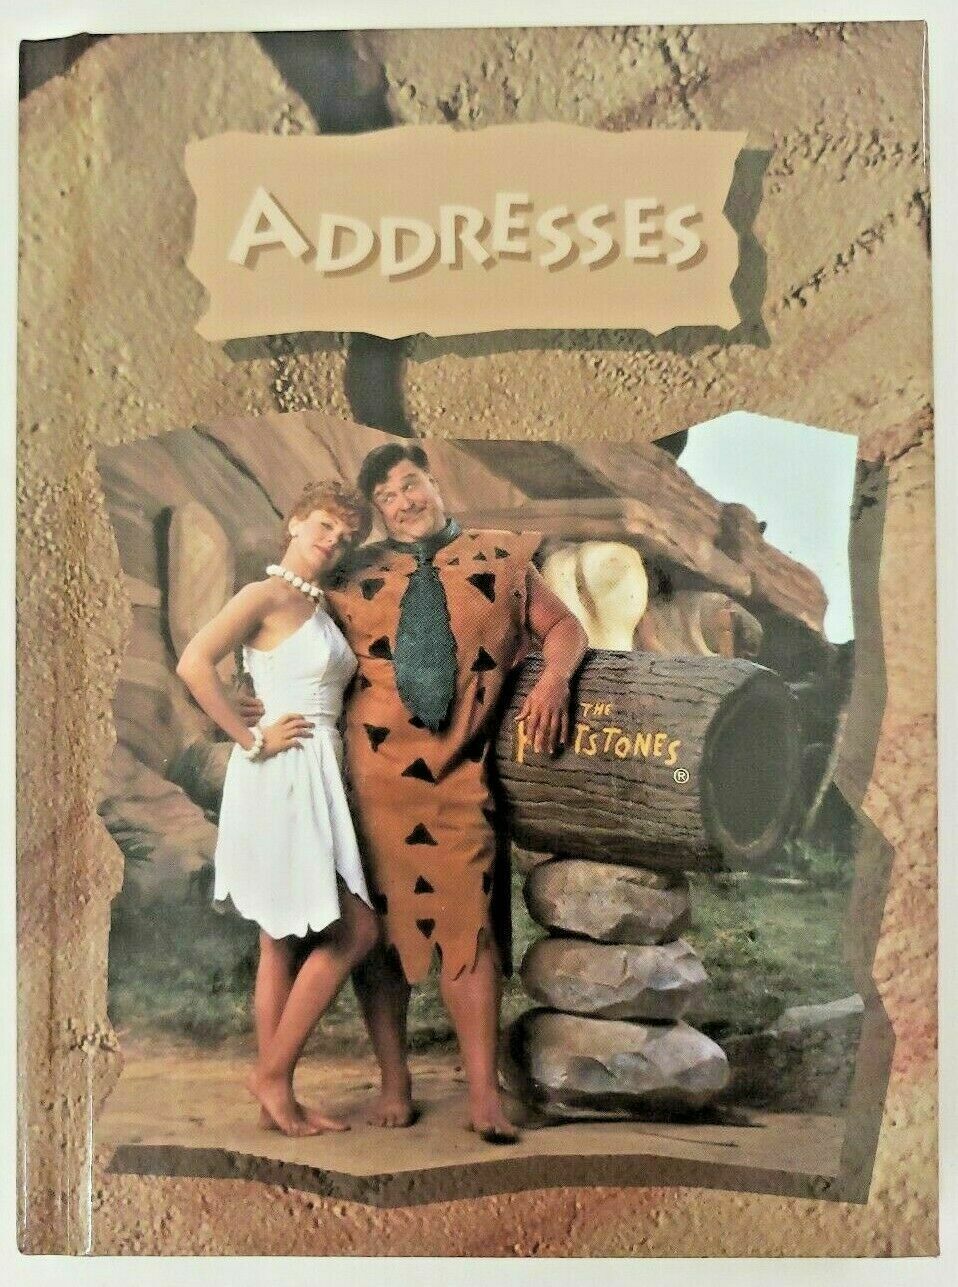 1993 Universal City Studios The Flintstones Addresses Book U166 - $14.99